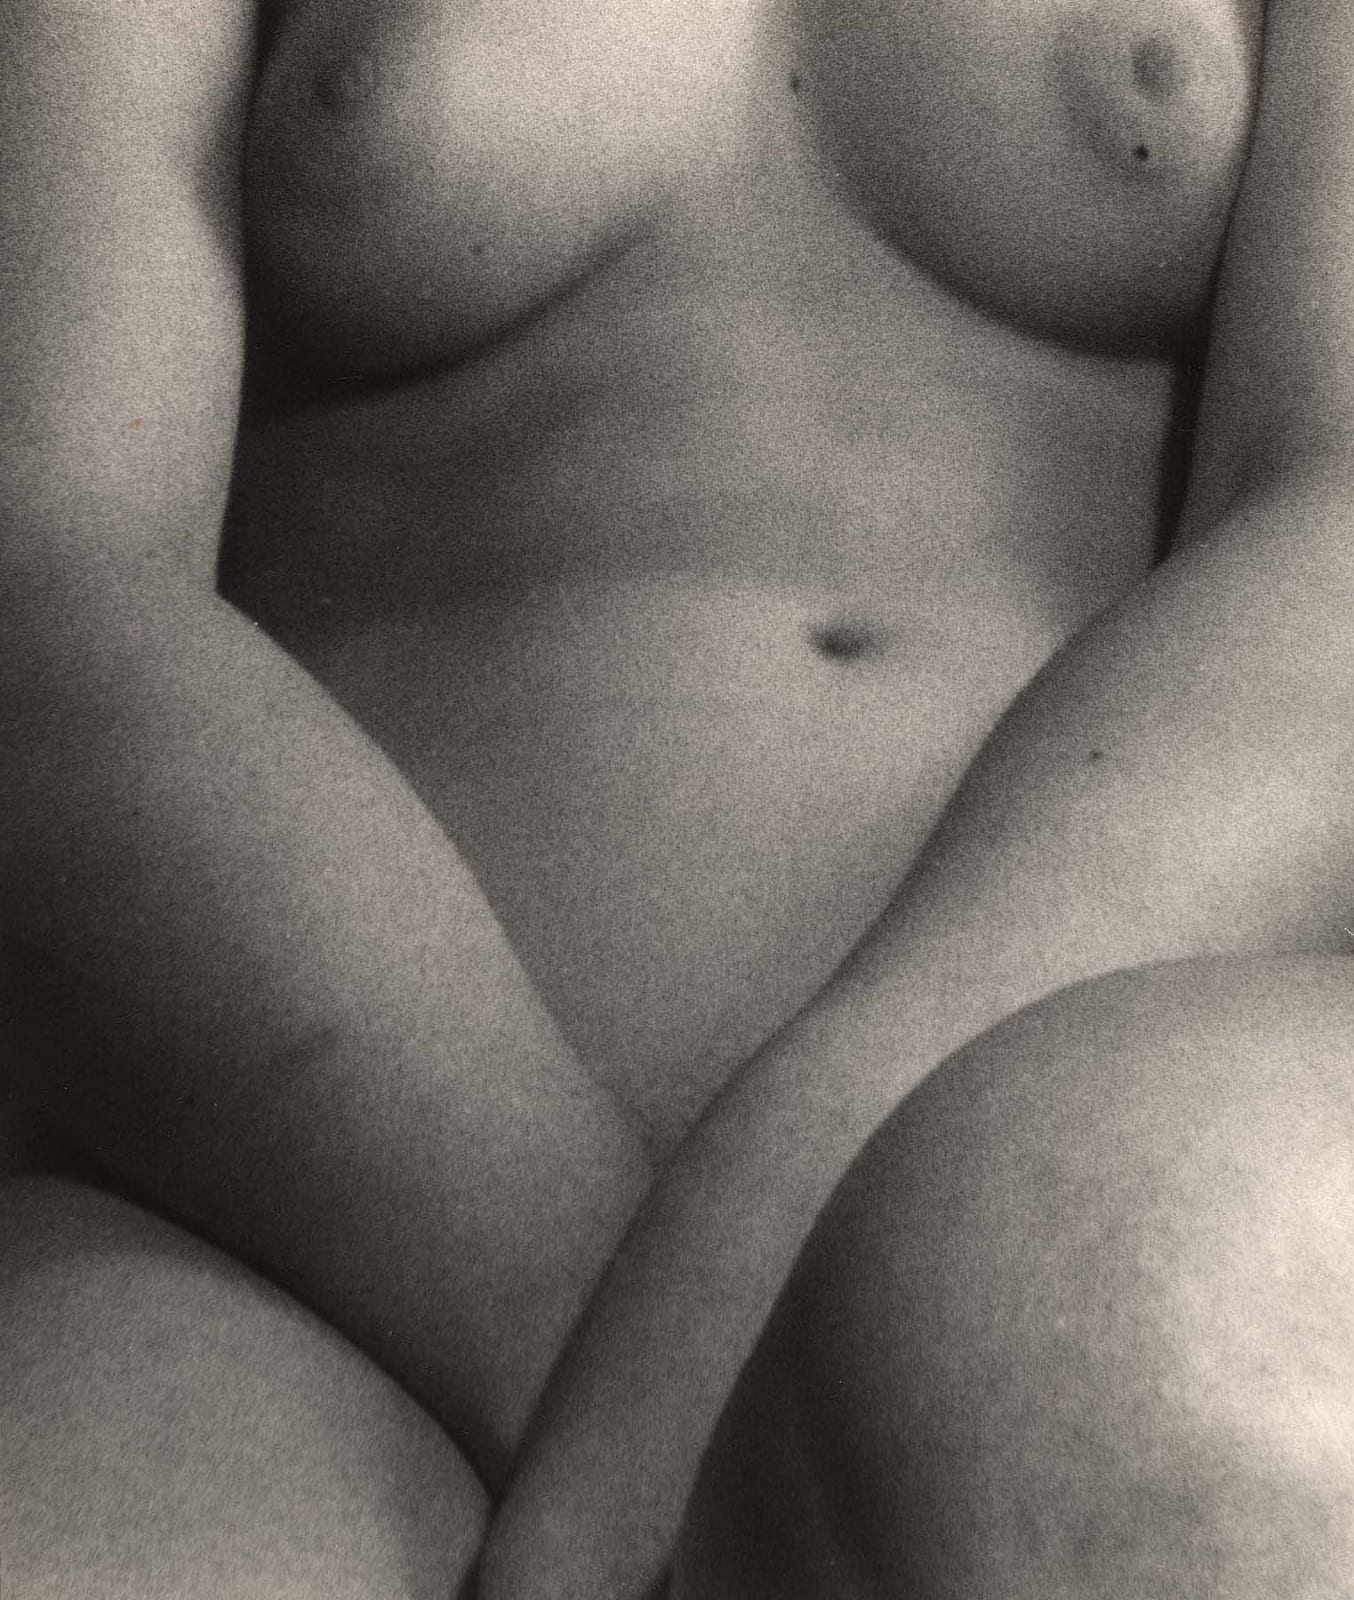 Bill Brandt, Nude, London, 1954